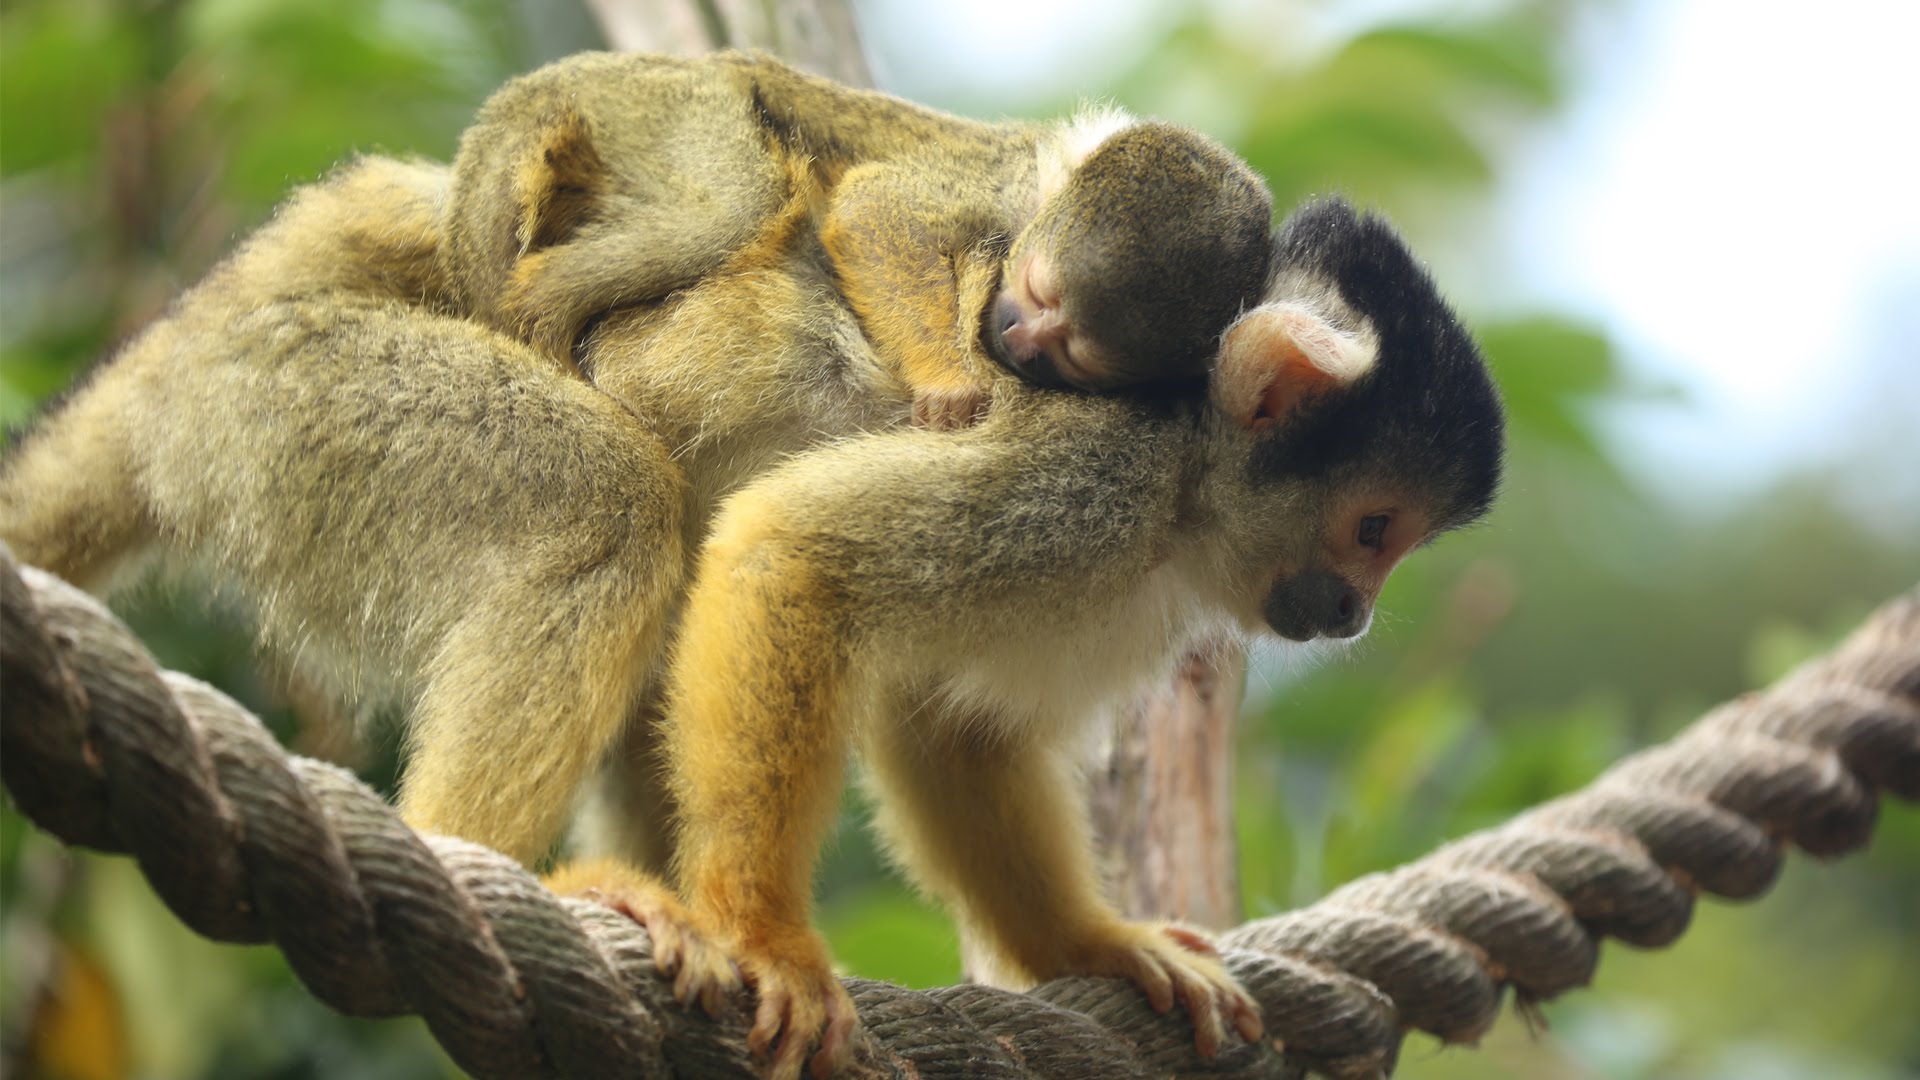 Adorable baby squirrel monkey - YouTube